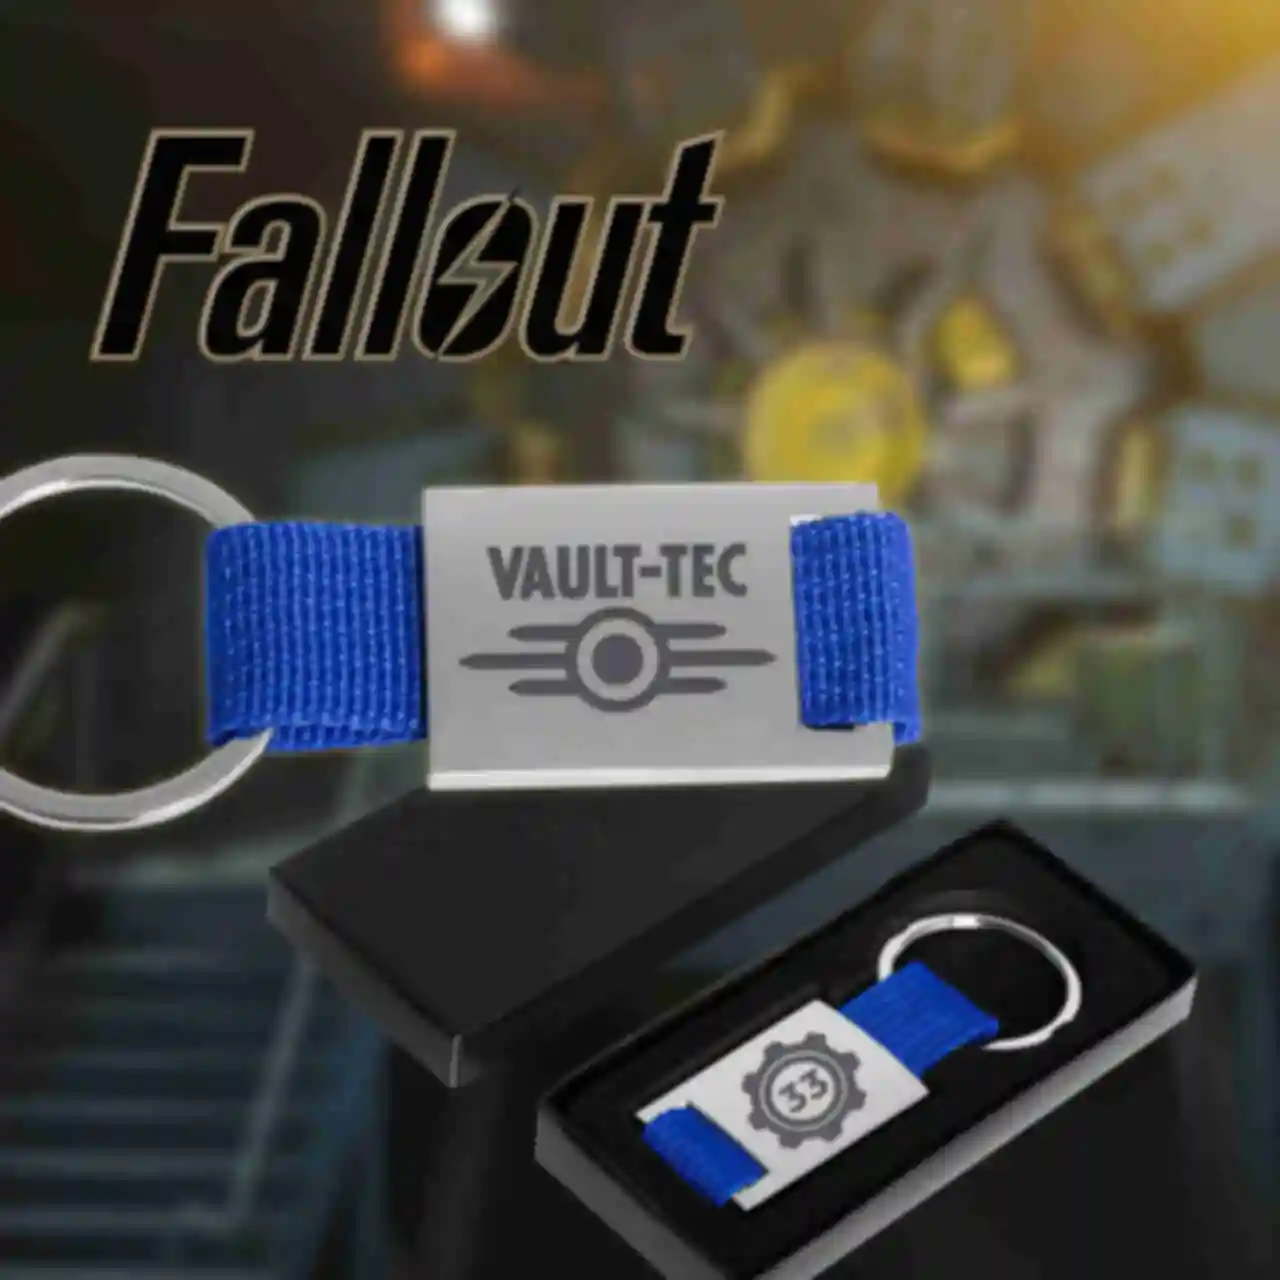 Брелок на ключи с убежища Vault-Tec ⦁ Атрибутика Fallout ⦁ Подарки для геймера и фаната игры Фоллаут